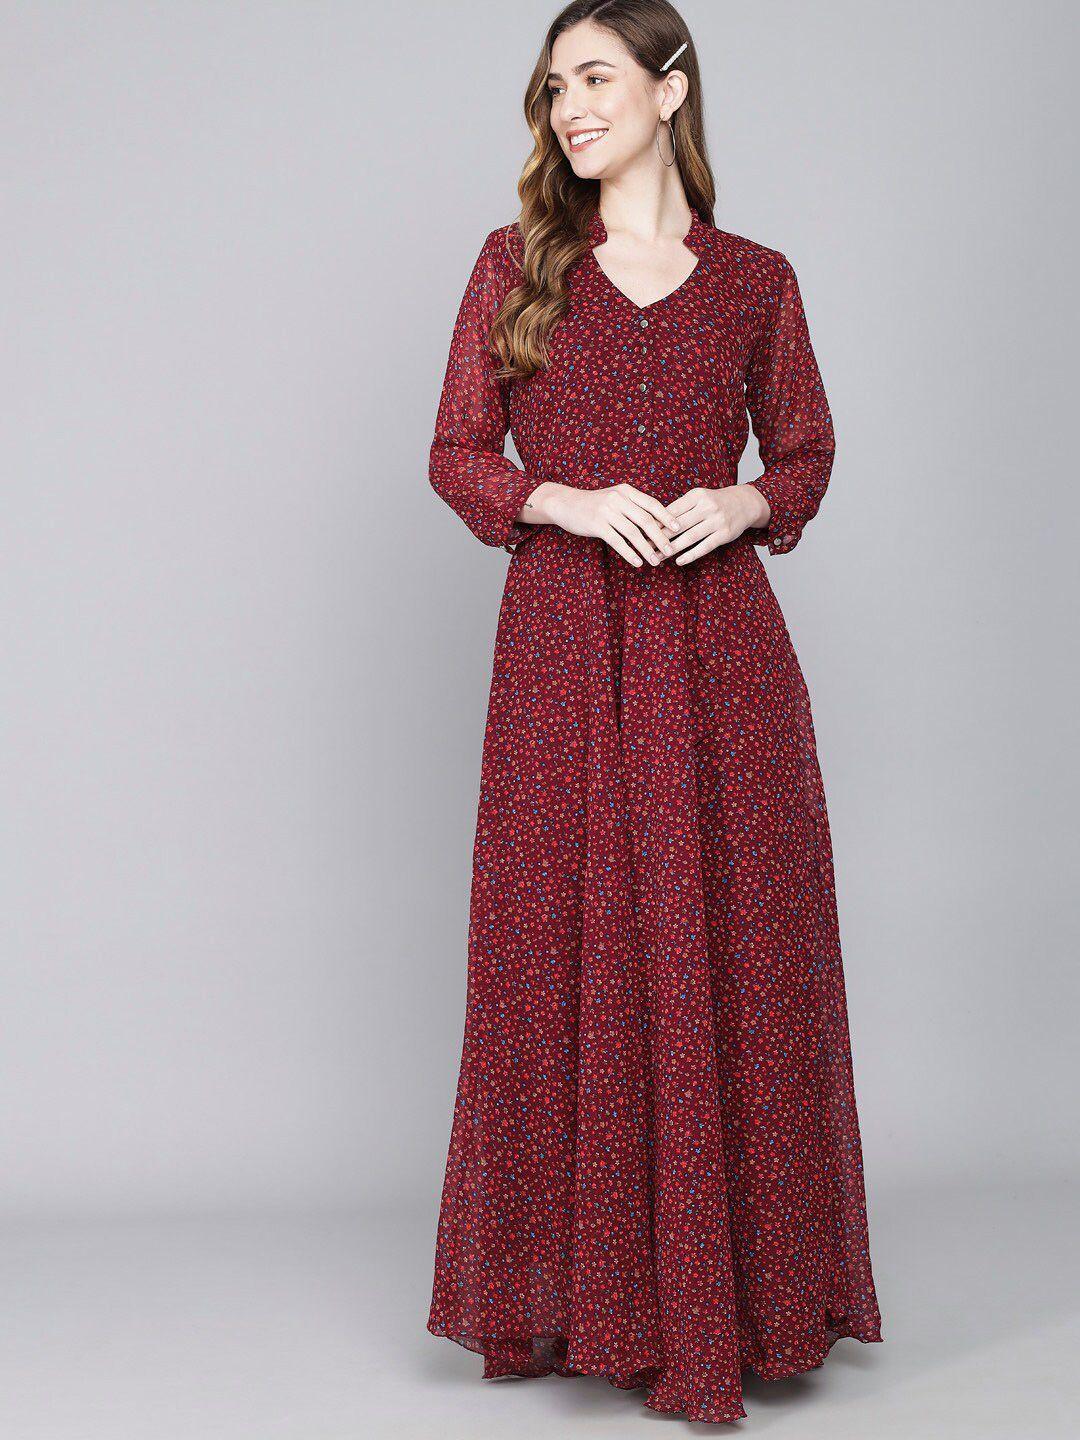 rudraaksha creations burgundy & rosewood floral georgette maxi dress